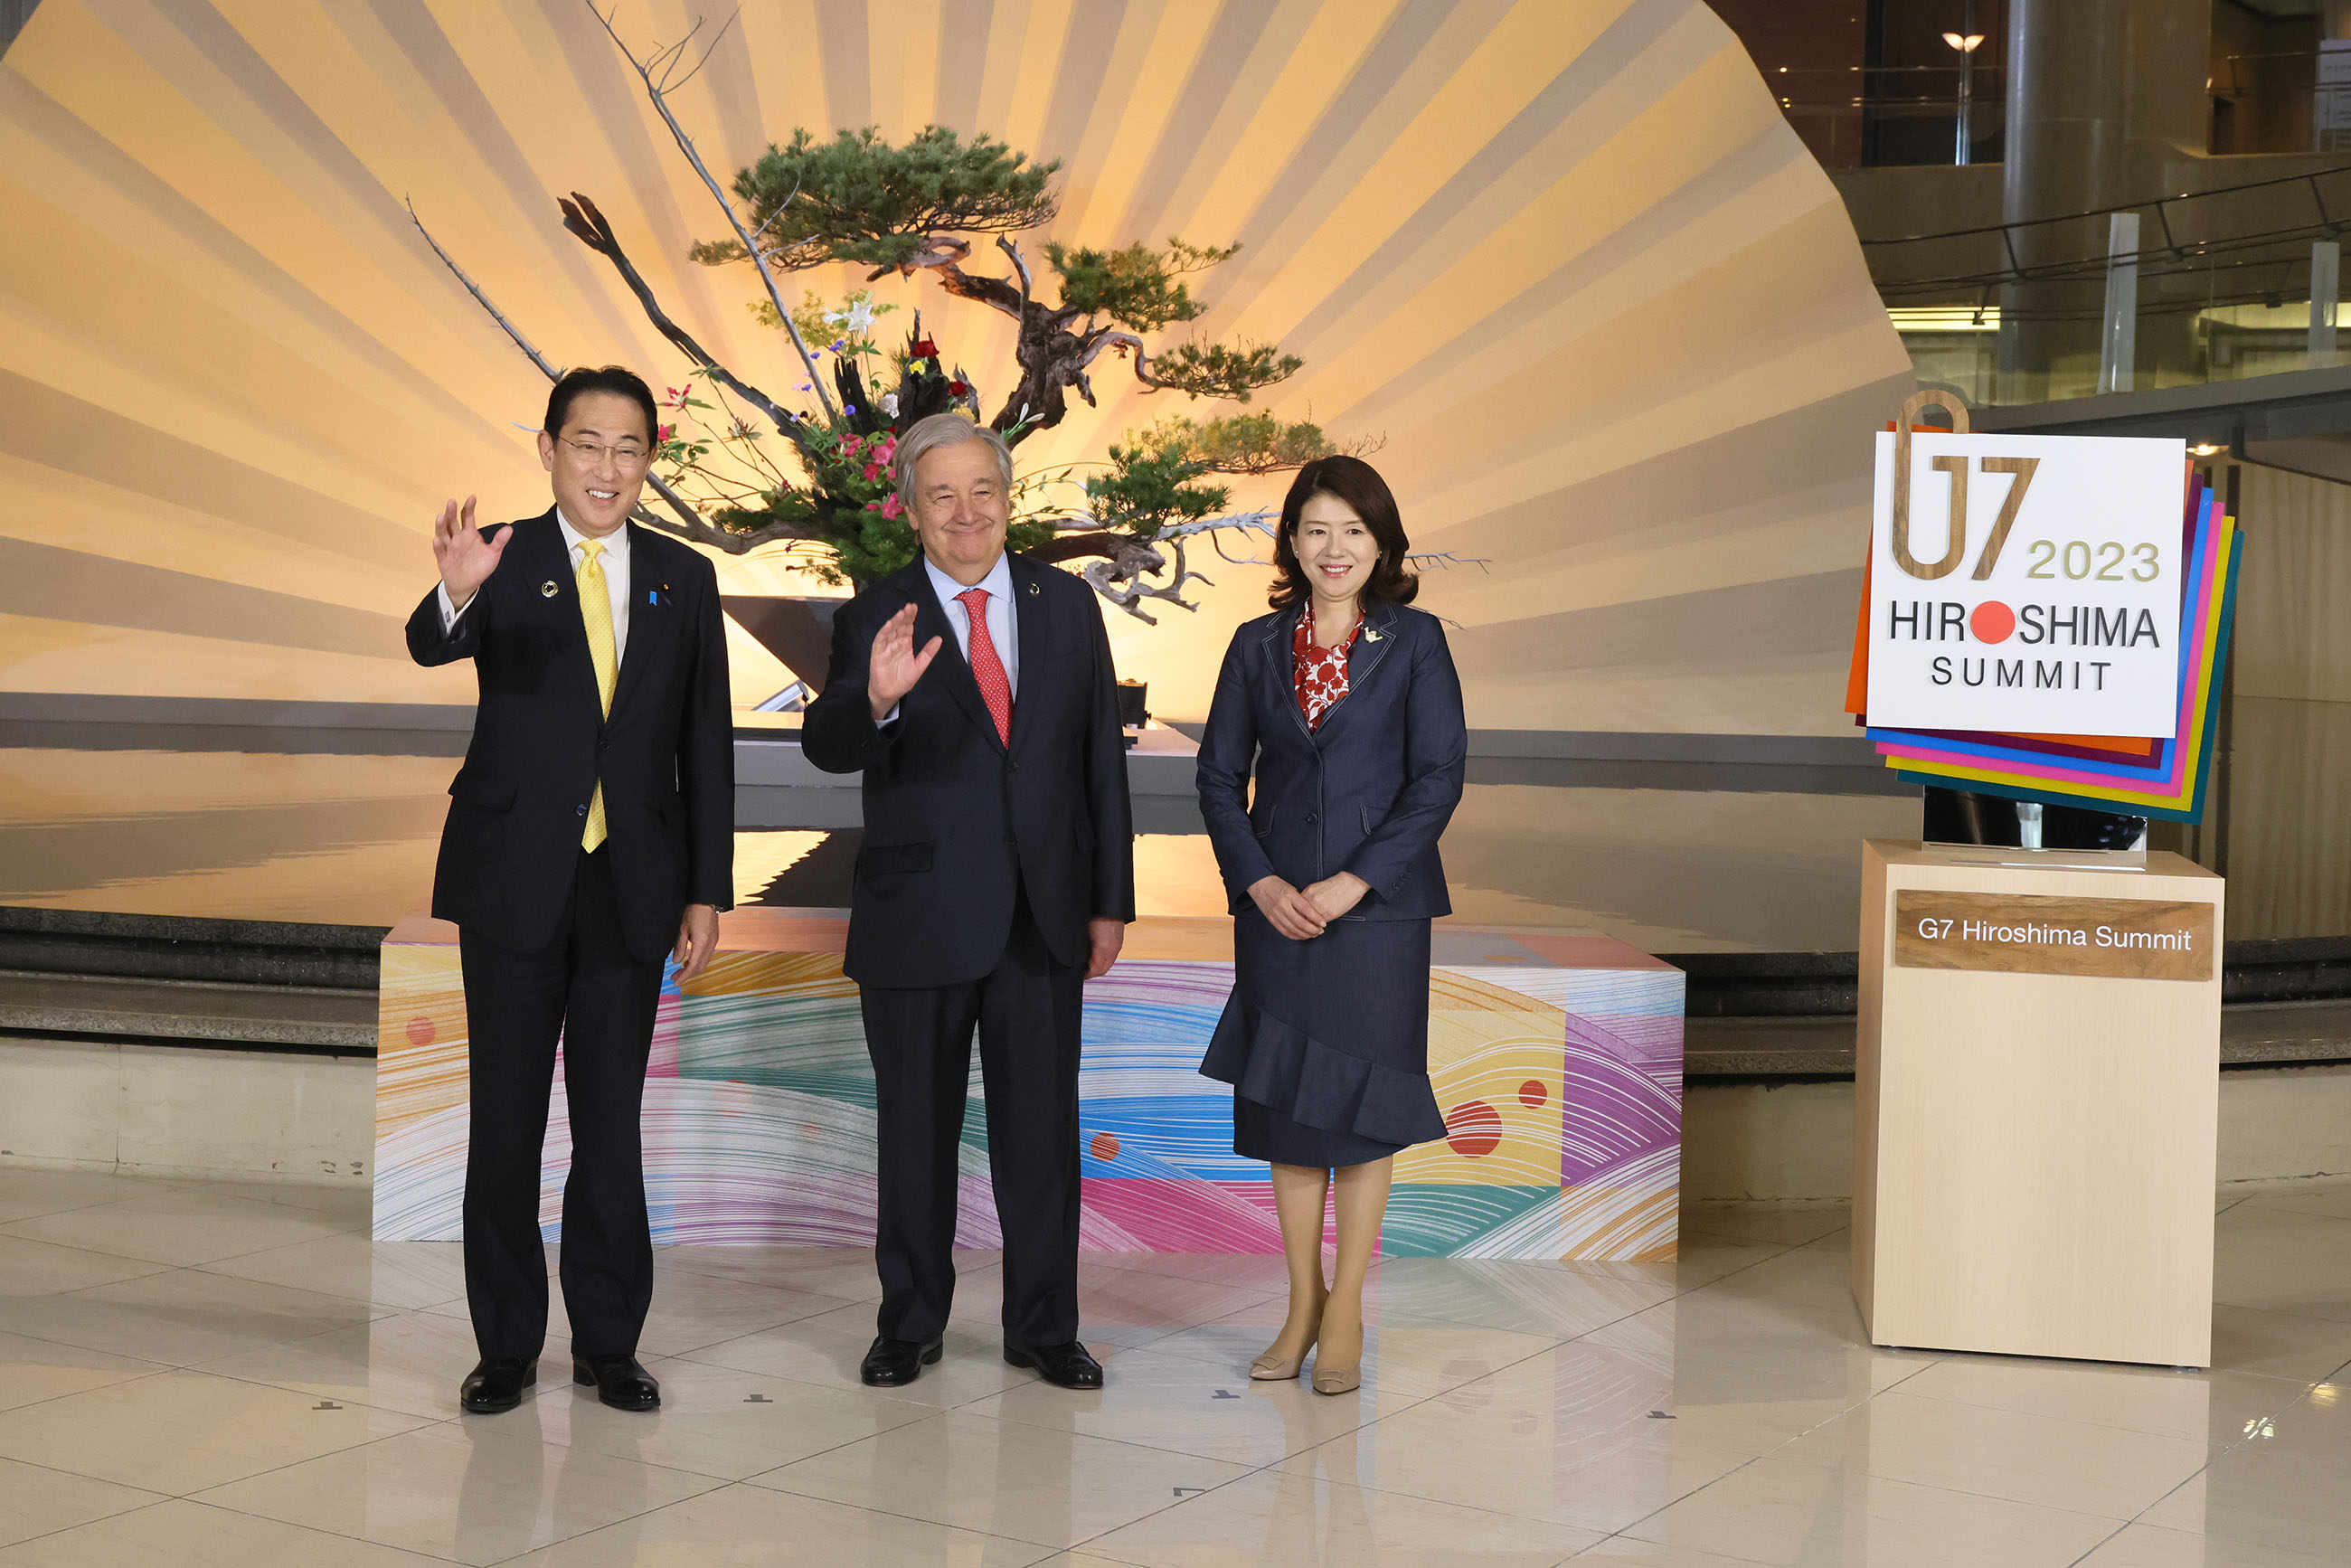 Prime Minister Kishida greeting the UN General Secretary Guterres